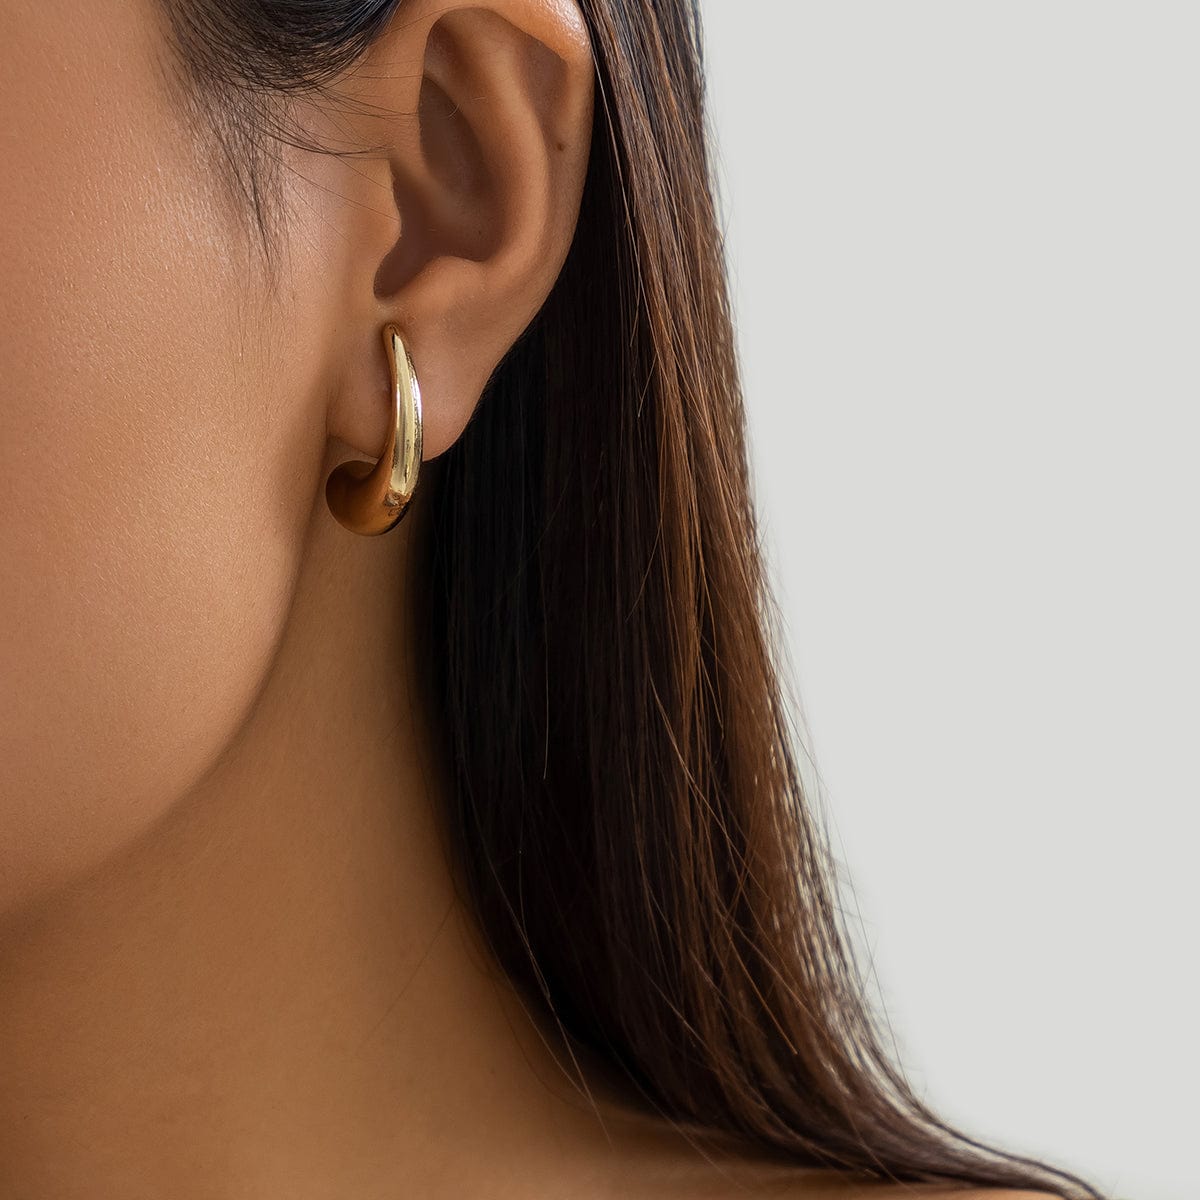 Geometric 3 Pairs Comma Shaped Stud Earrings Set - ArtGalleryZen